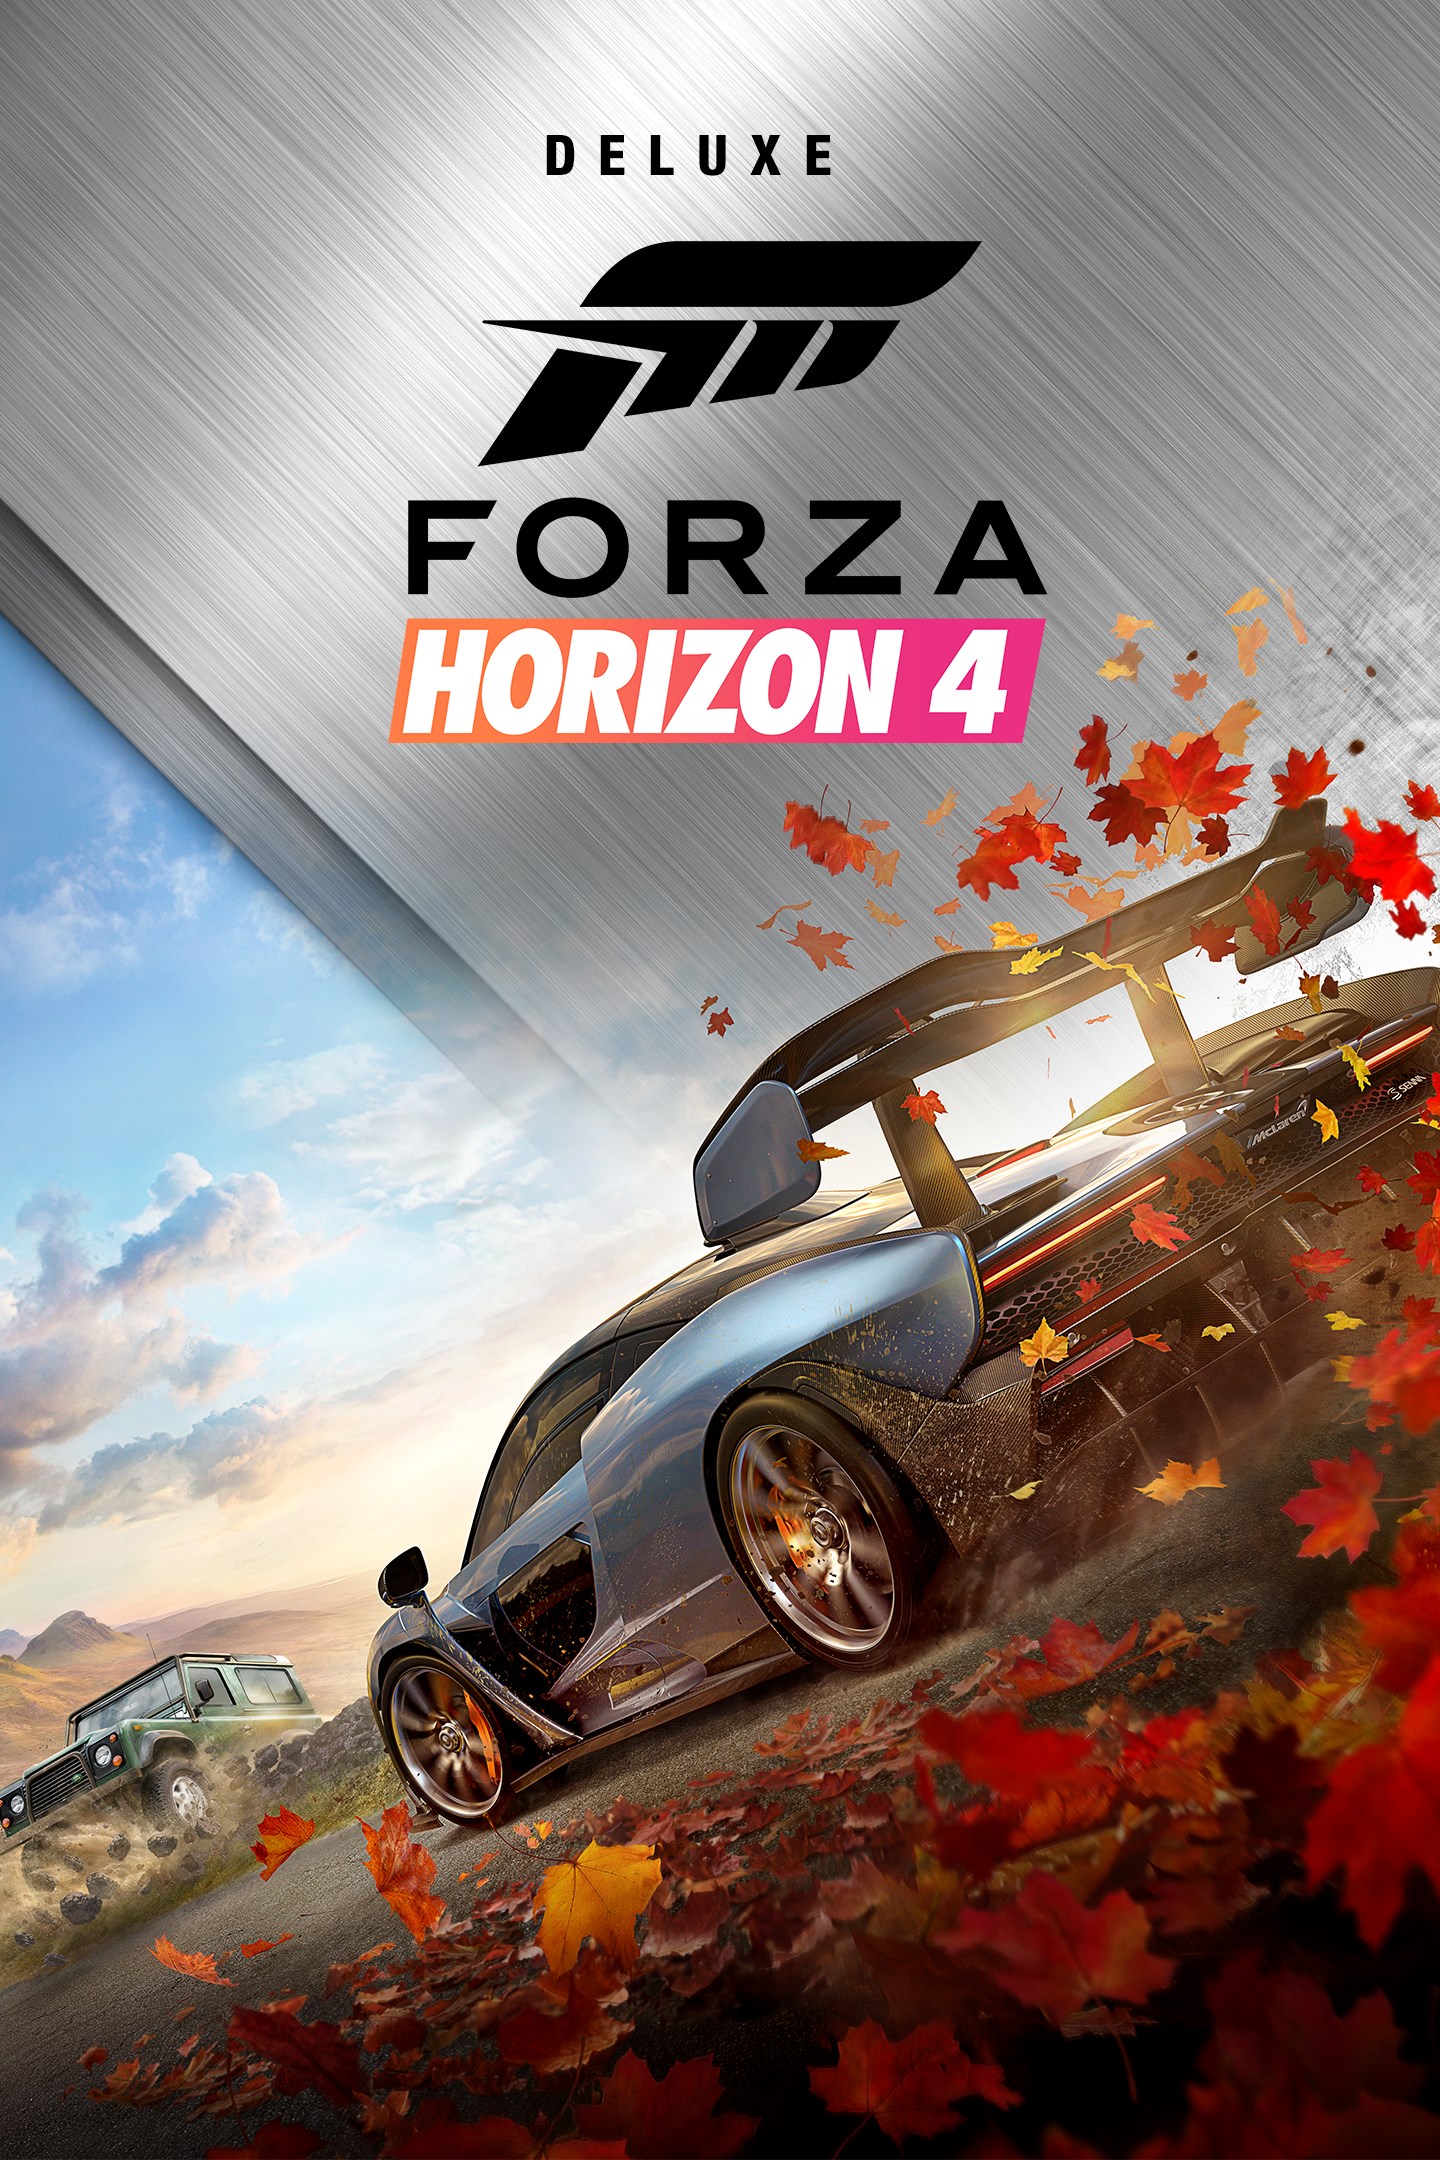 Forza Horizon 4 Deluxe Edition box shot